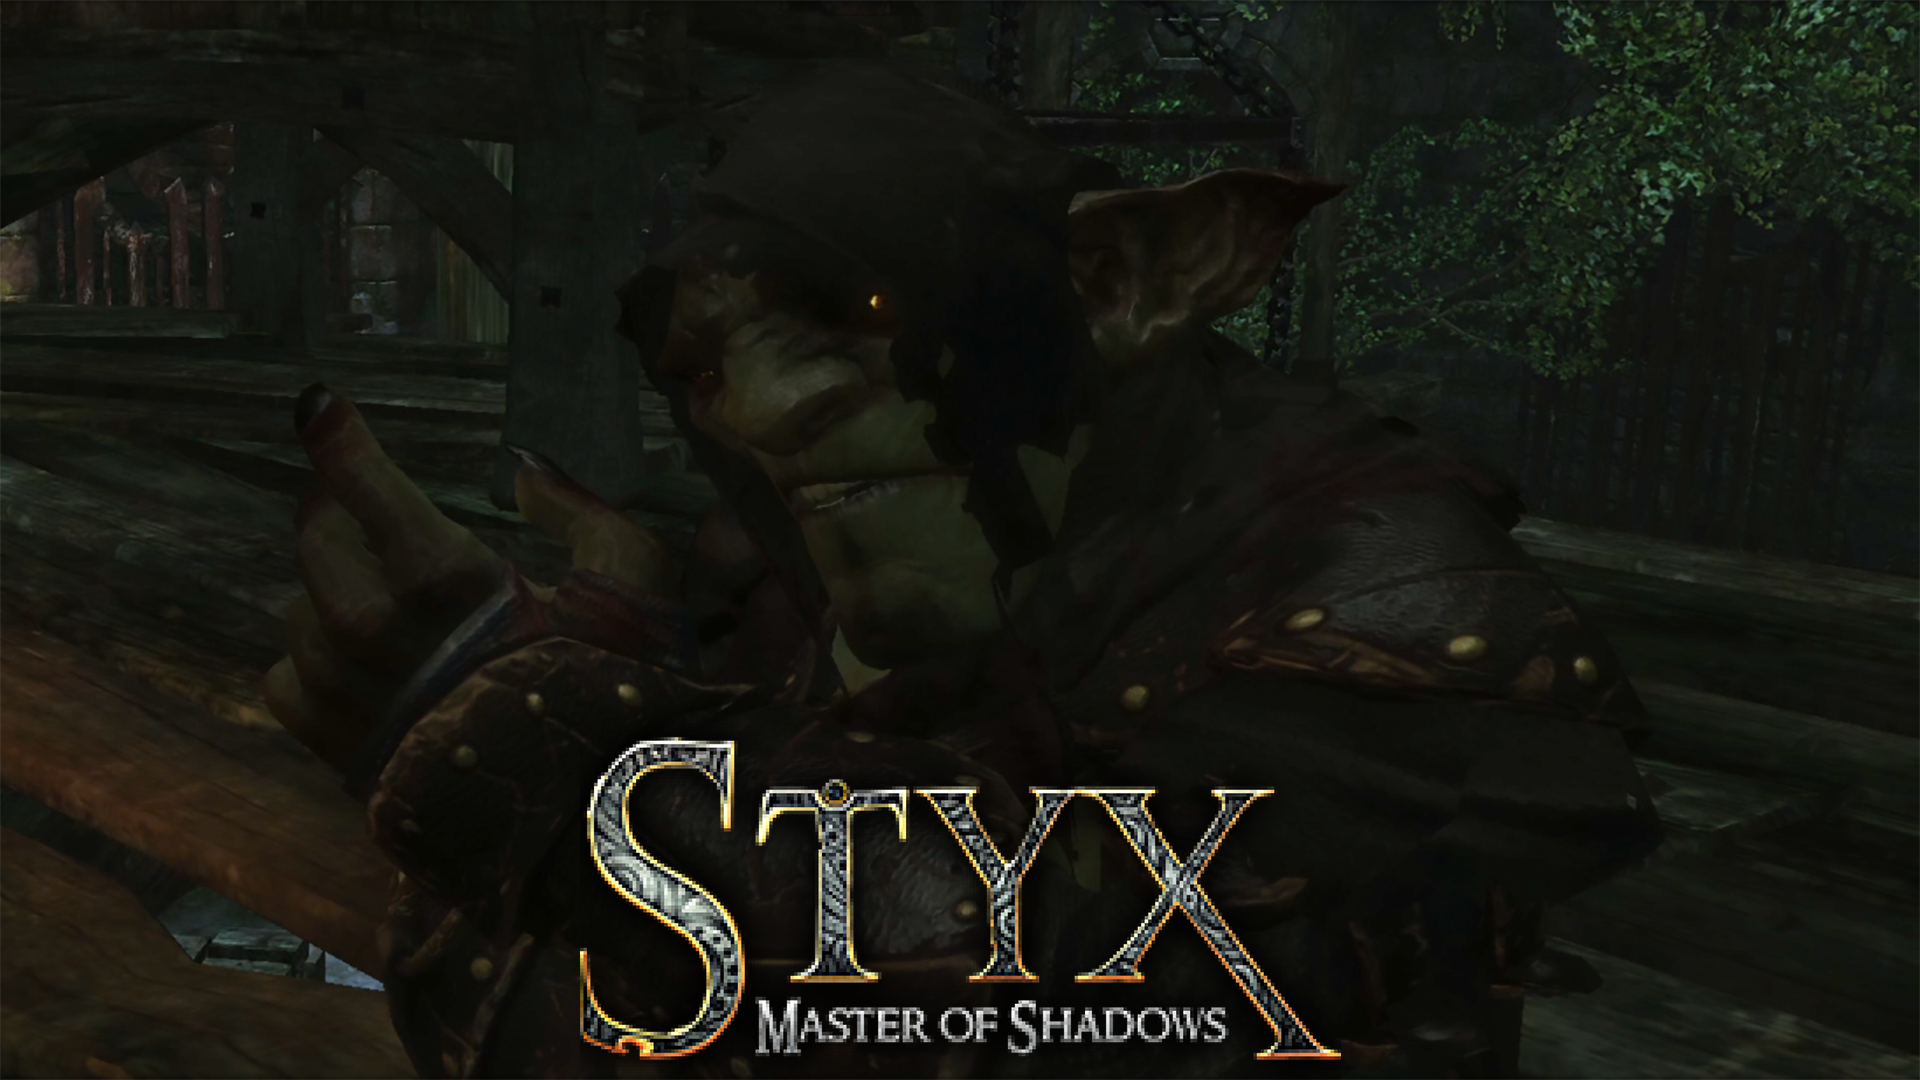 ПРОБЛЕМЫ С ШАРАМИ? НАМАЖЬ СМЕТАНОЙ! ▣ Styx: Master of Shadows #8